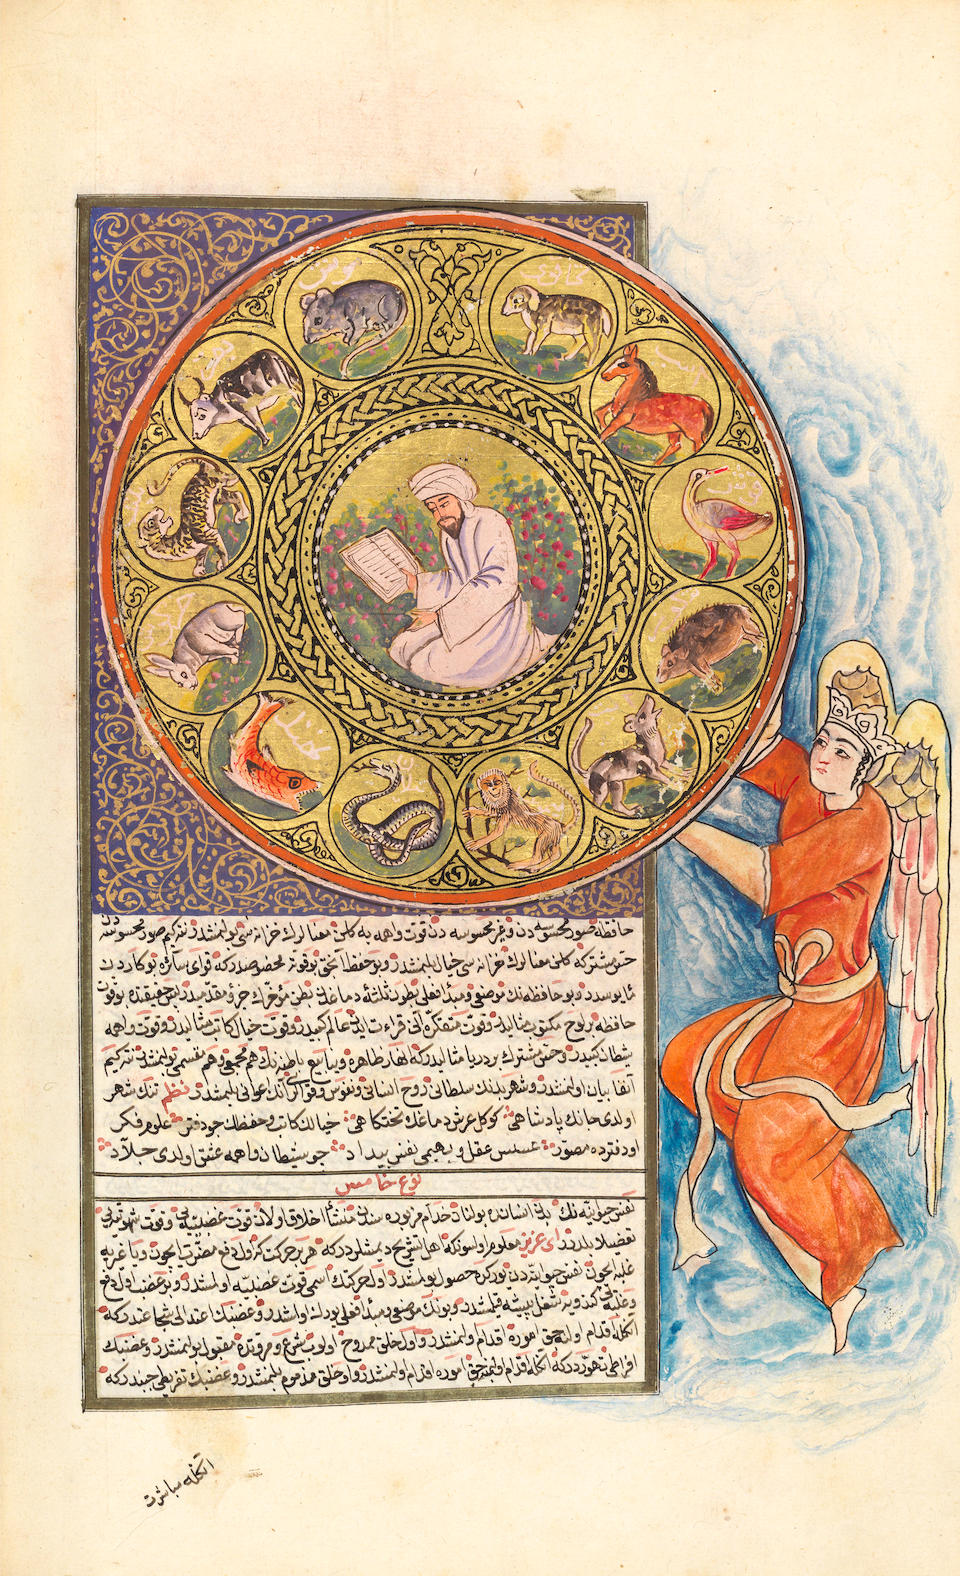 Ibrahim Hakki, Ma'rifatnameh, an encyclopaedia of cosmological subjects, copied by Dervish Muhammad bin 'Ali al-Erzurumi   Ottoman Turkey, probably Erzurum, dated AH 1238/AD 1822-23